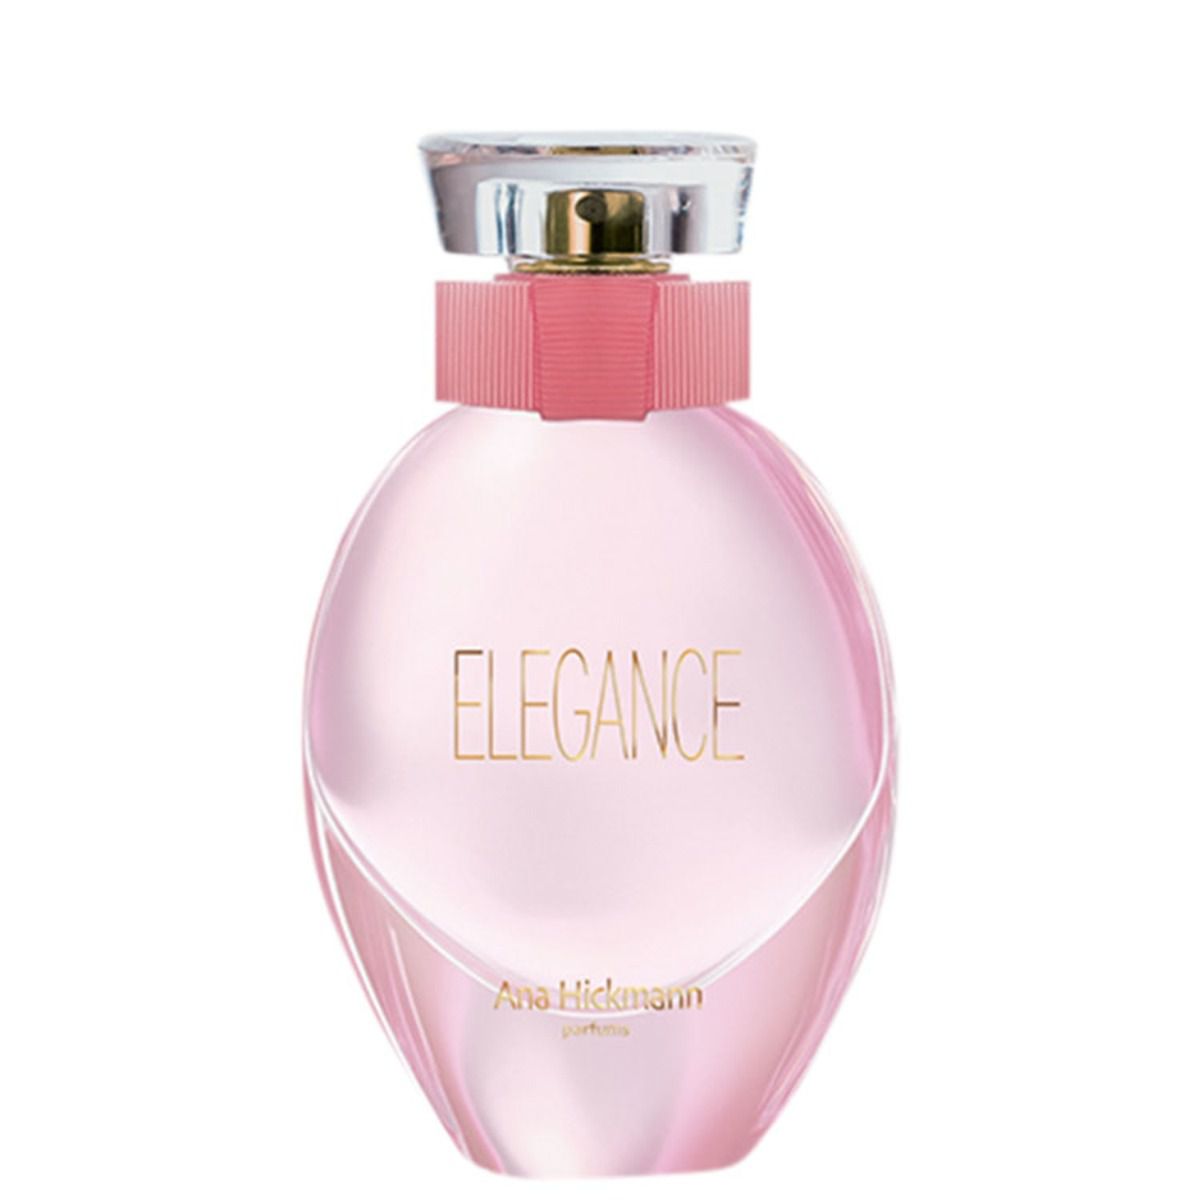 Perfume Elegance Ana Hickmann Eau de Cologne - Feminino 50ml